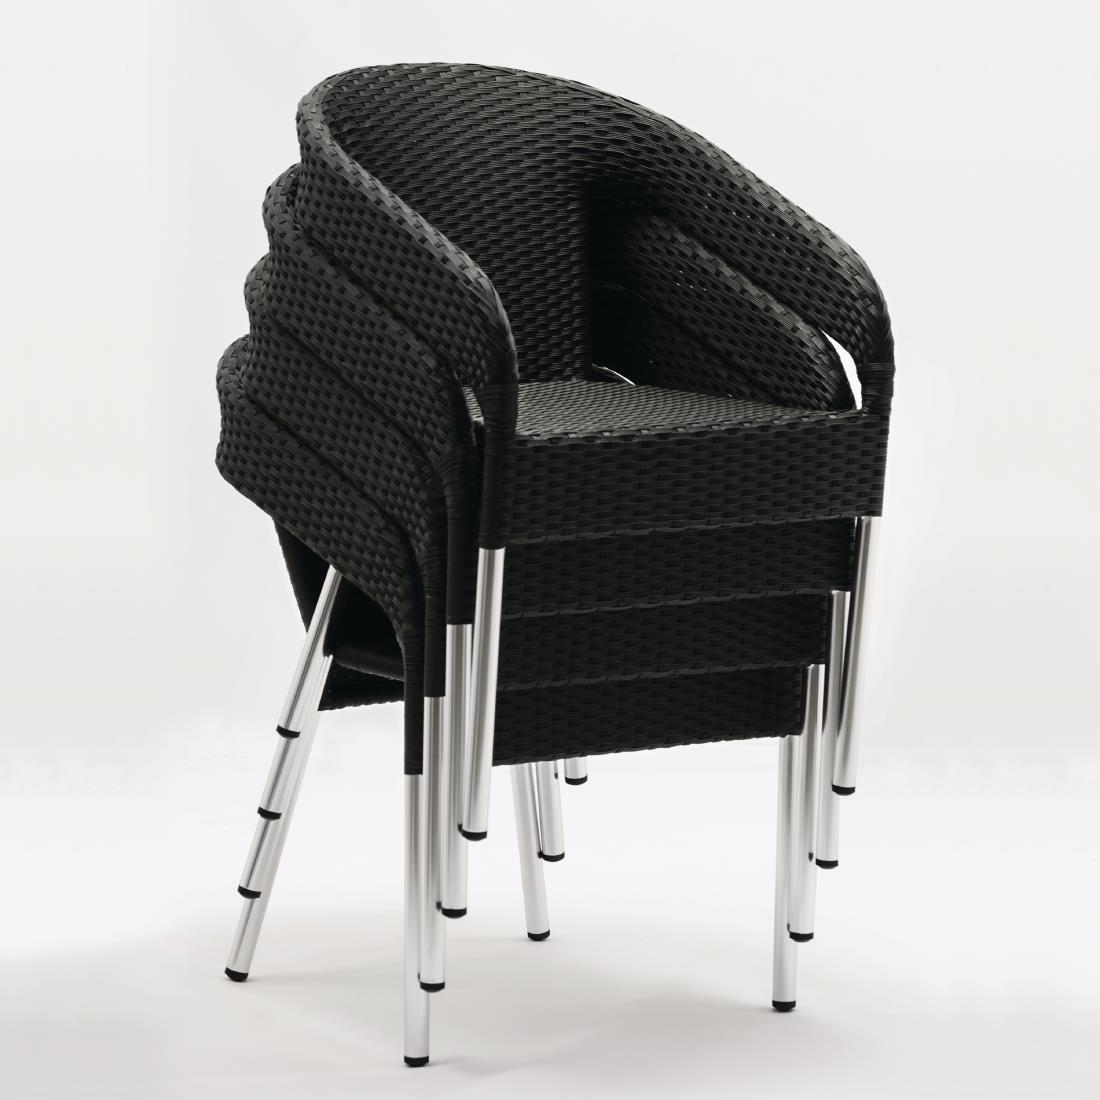 Bolero Wicker Wraparound Bistro Chairs Charcoal (Pack of 4) - CG223  - 2